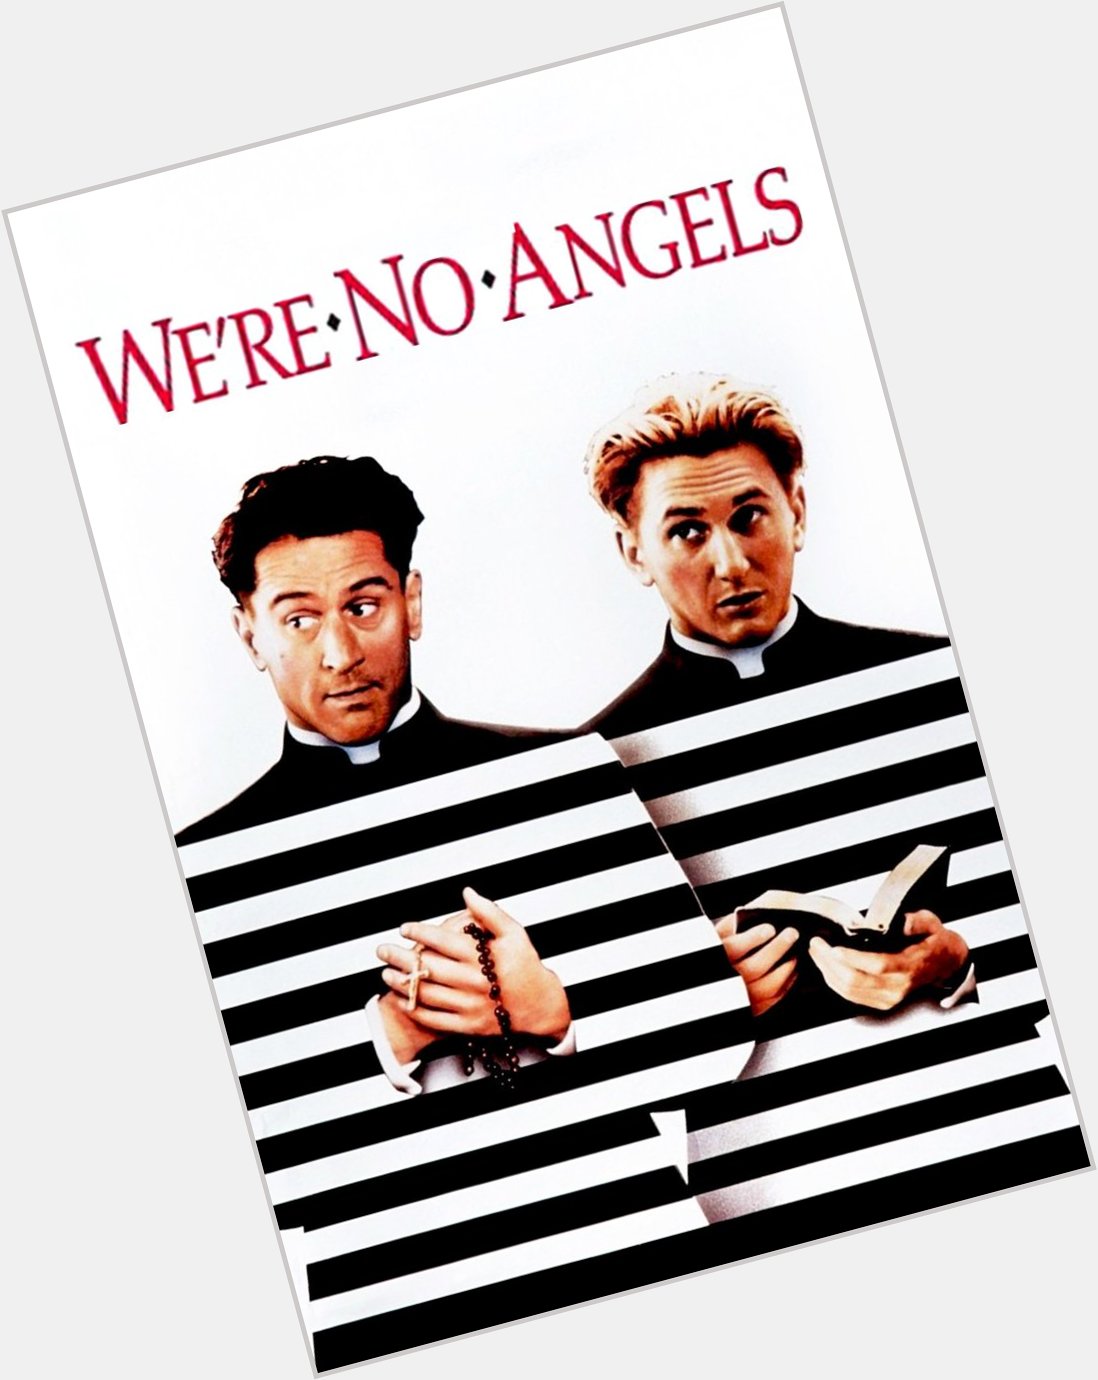 We\re No Angels  (1989)
Happy Birthday to Robert De Niro and Sean Penn! 